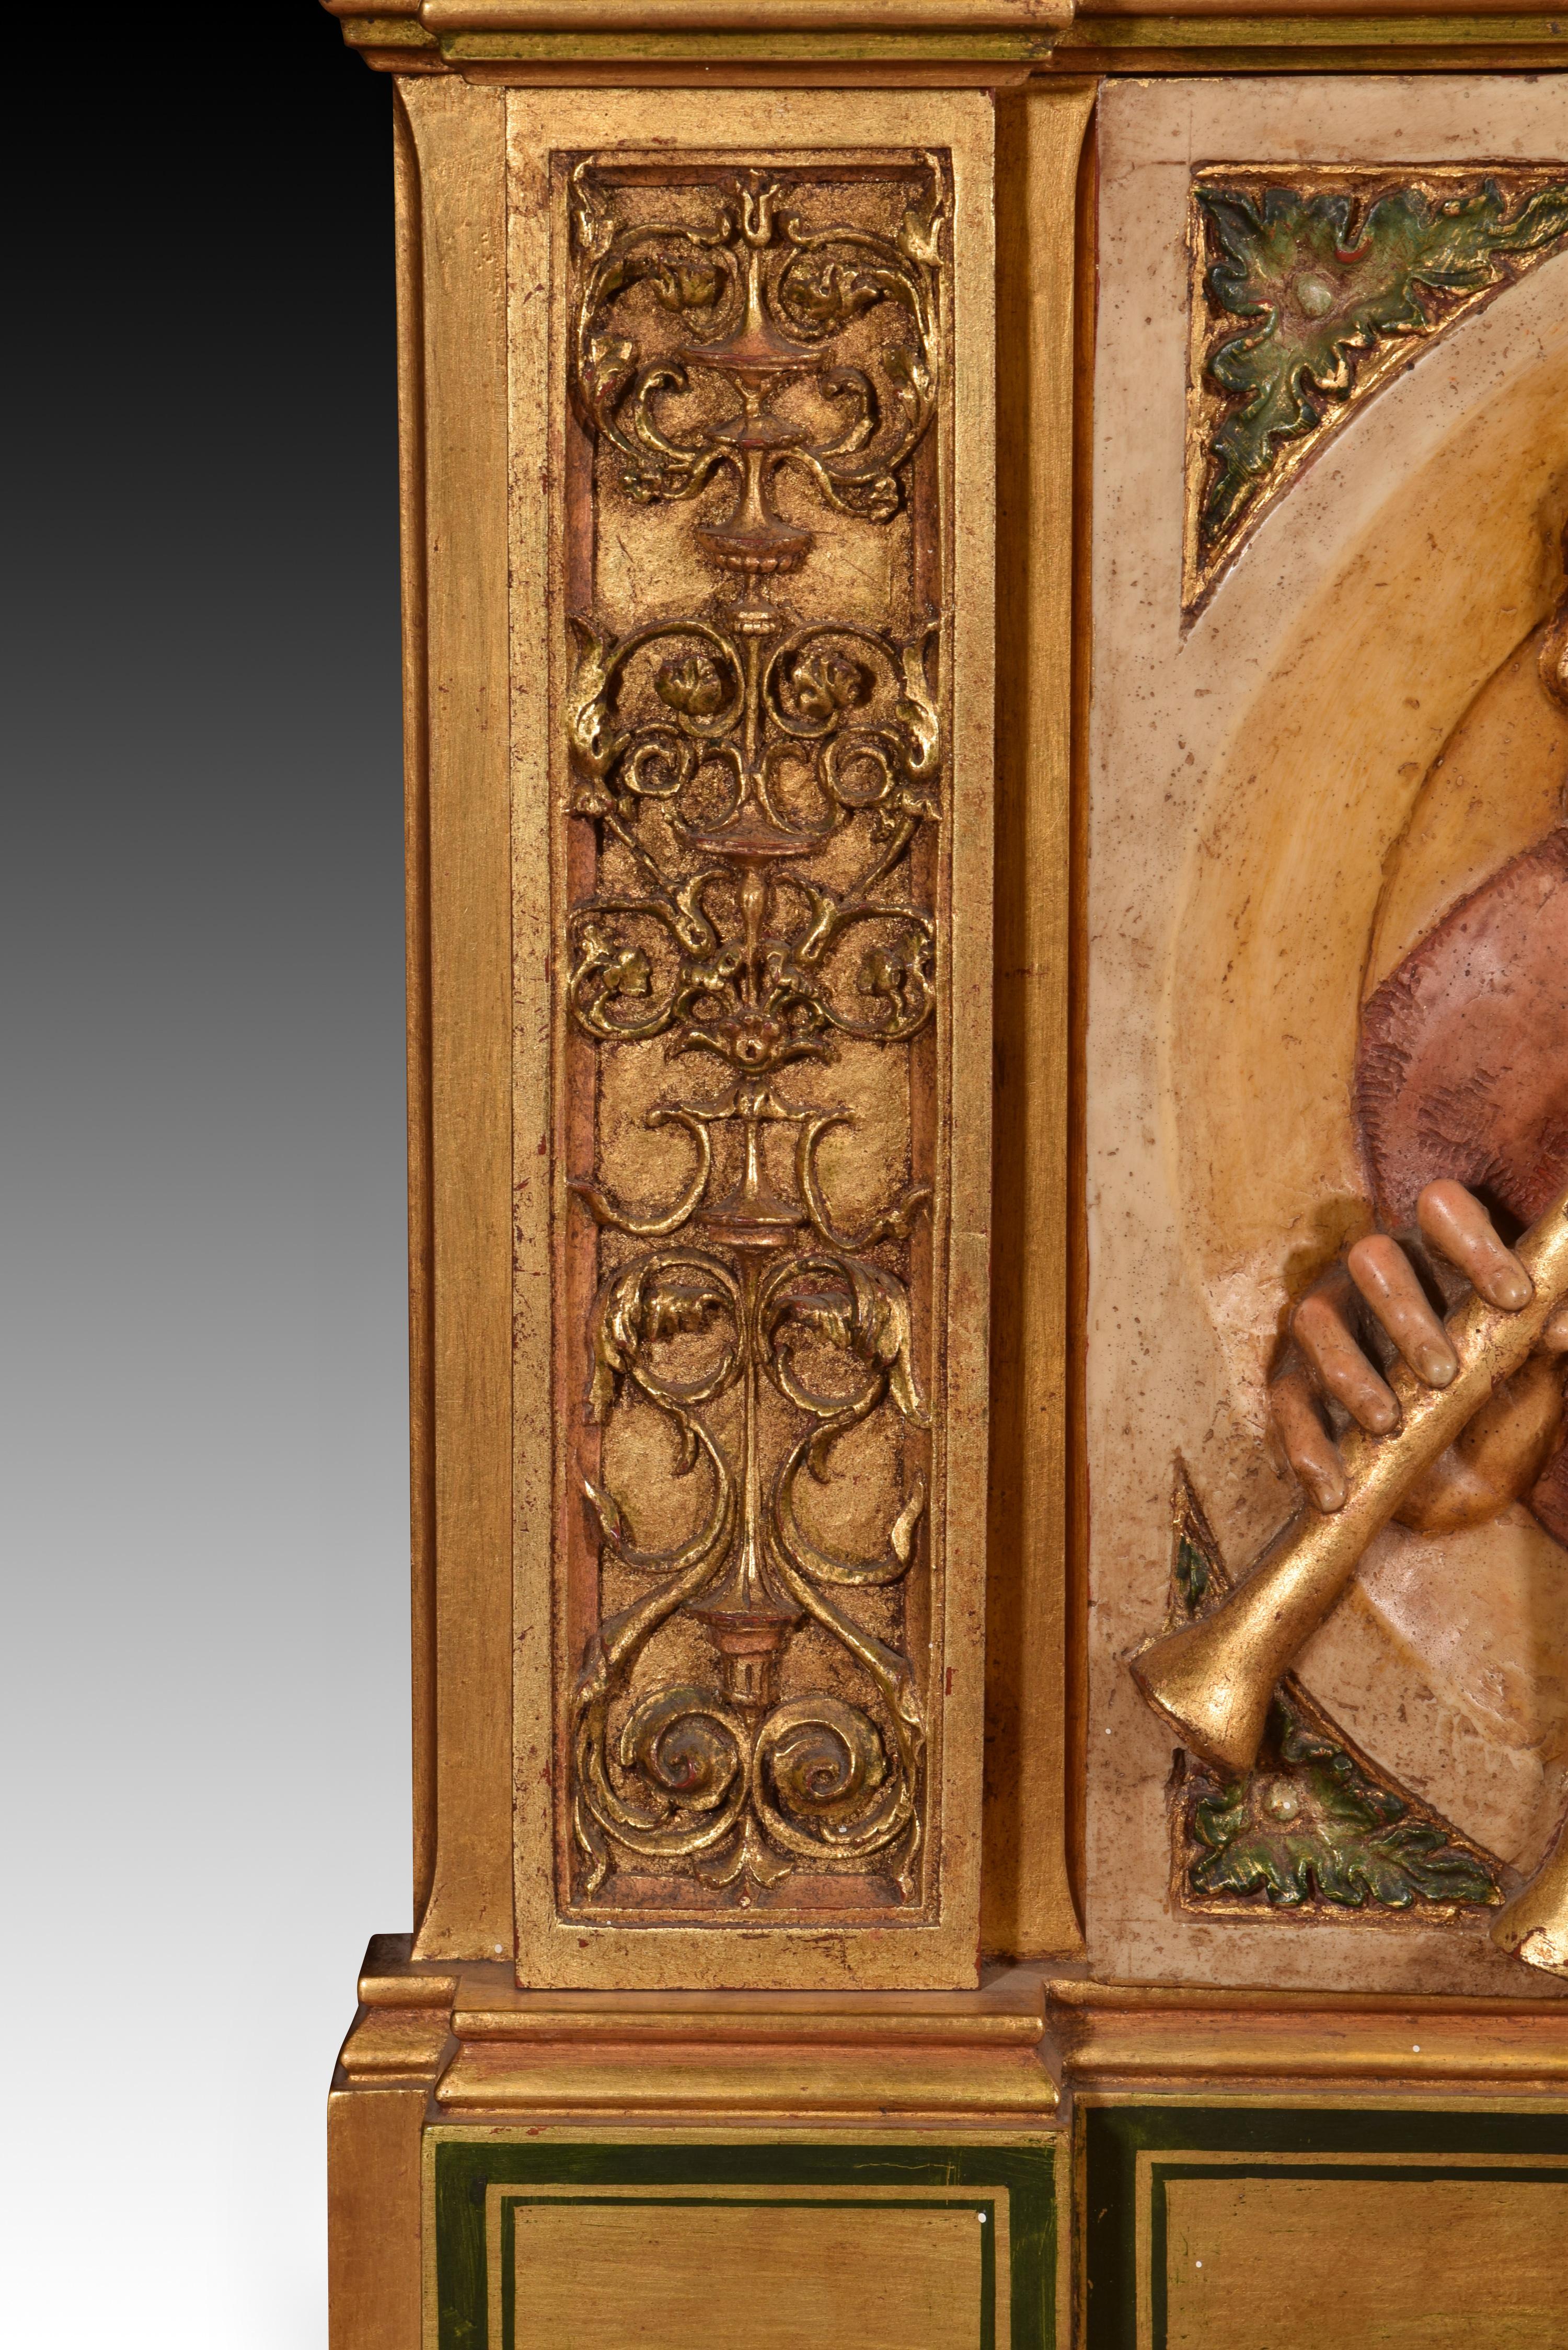 Renaissance Revival Musicians, relief. Molded alabaster. 20th century, after Renaissance models. For Sale